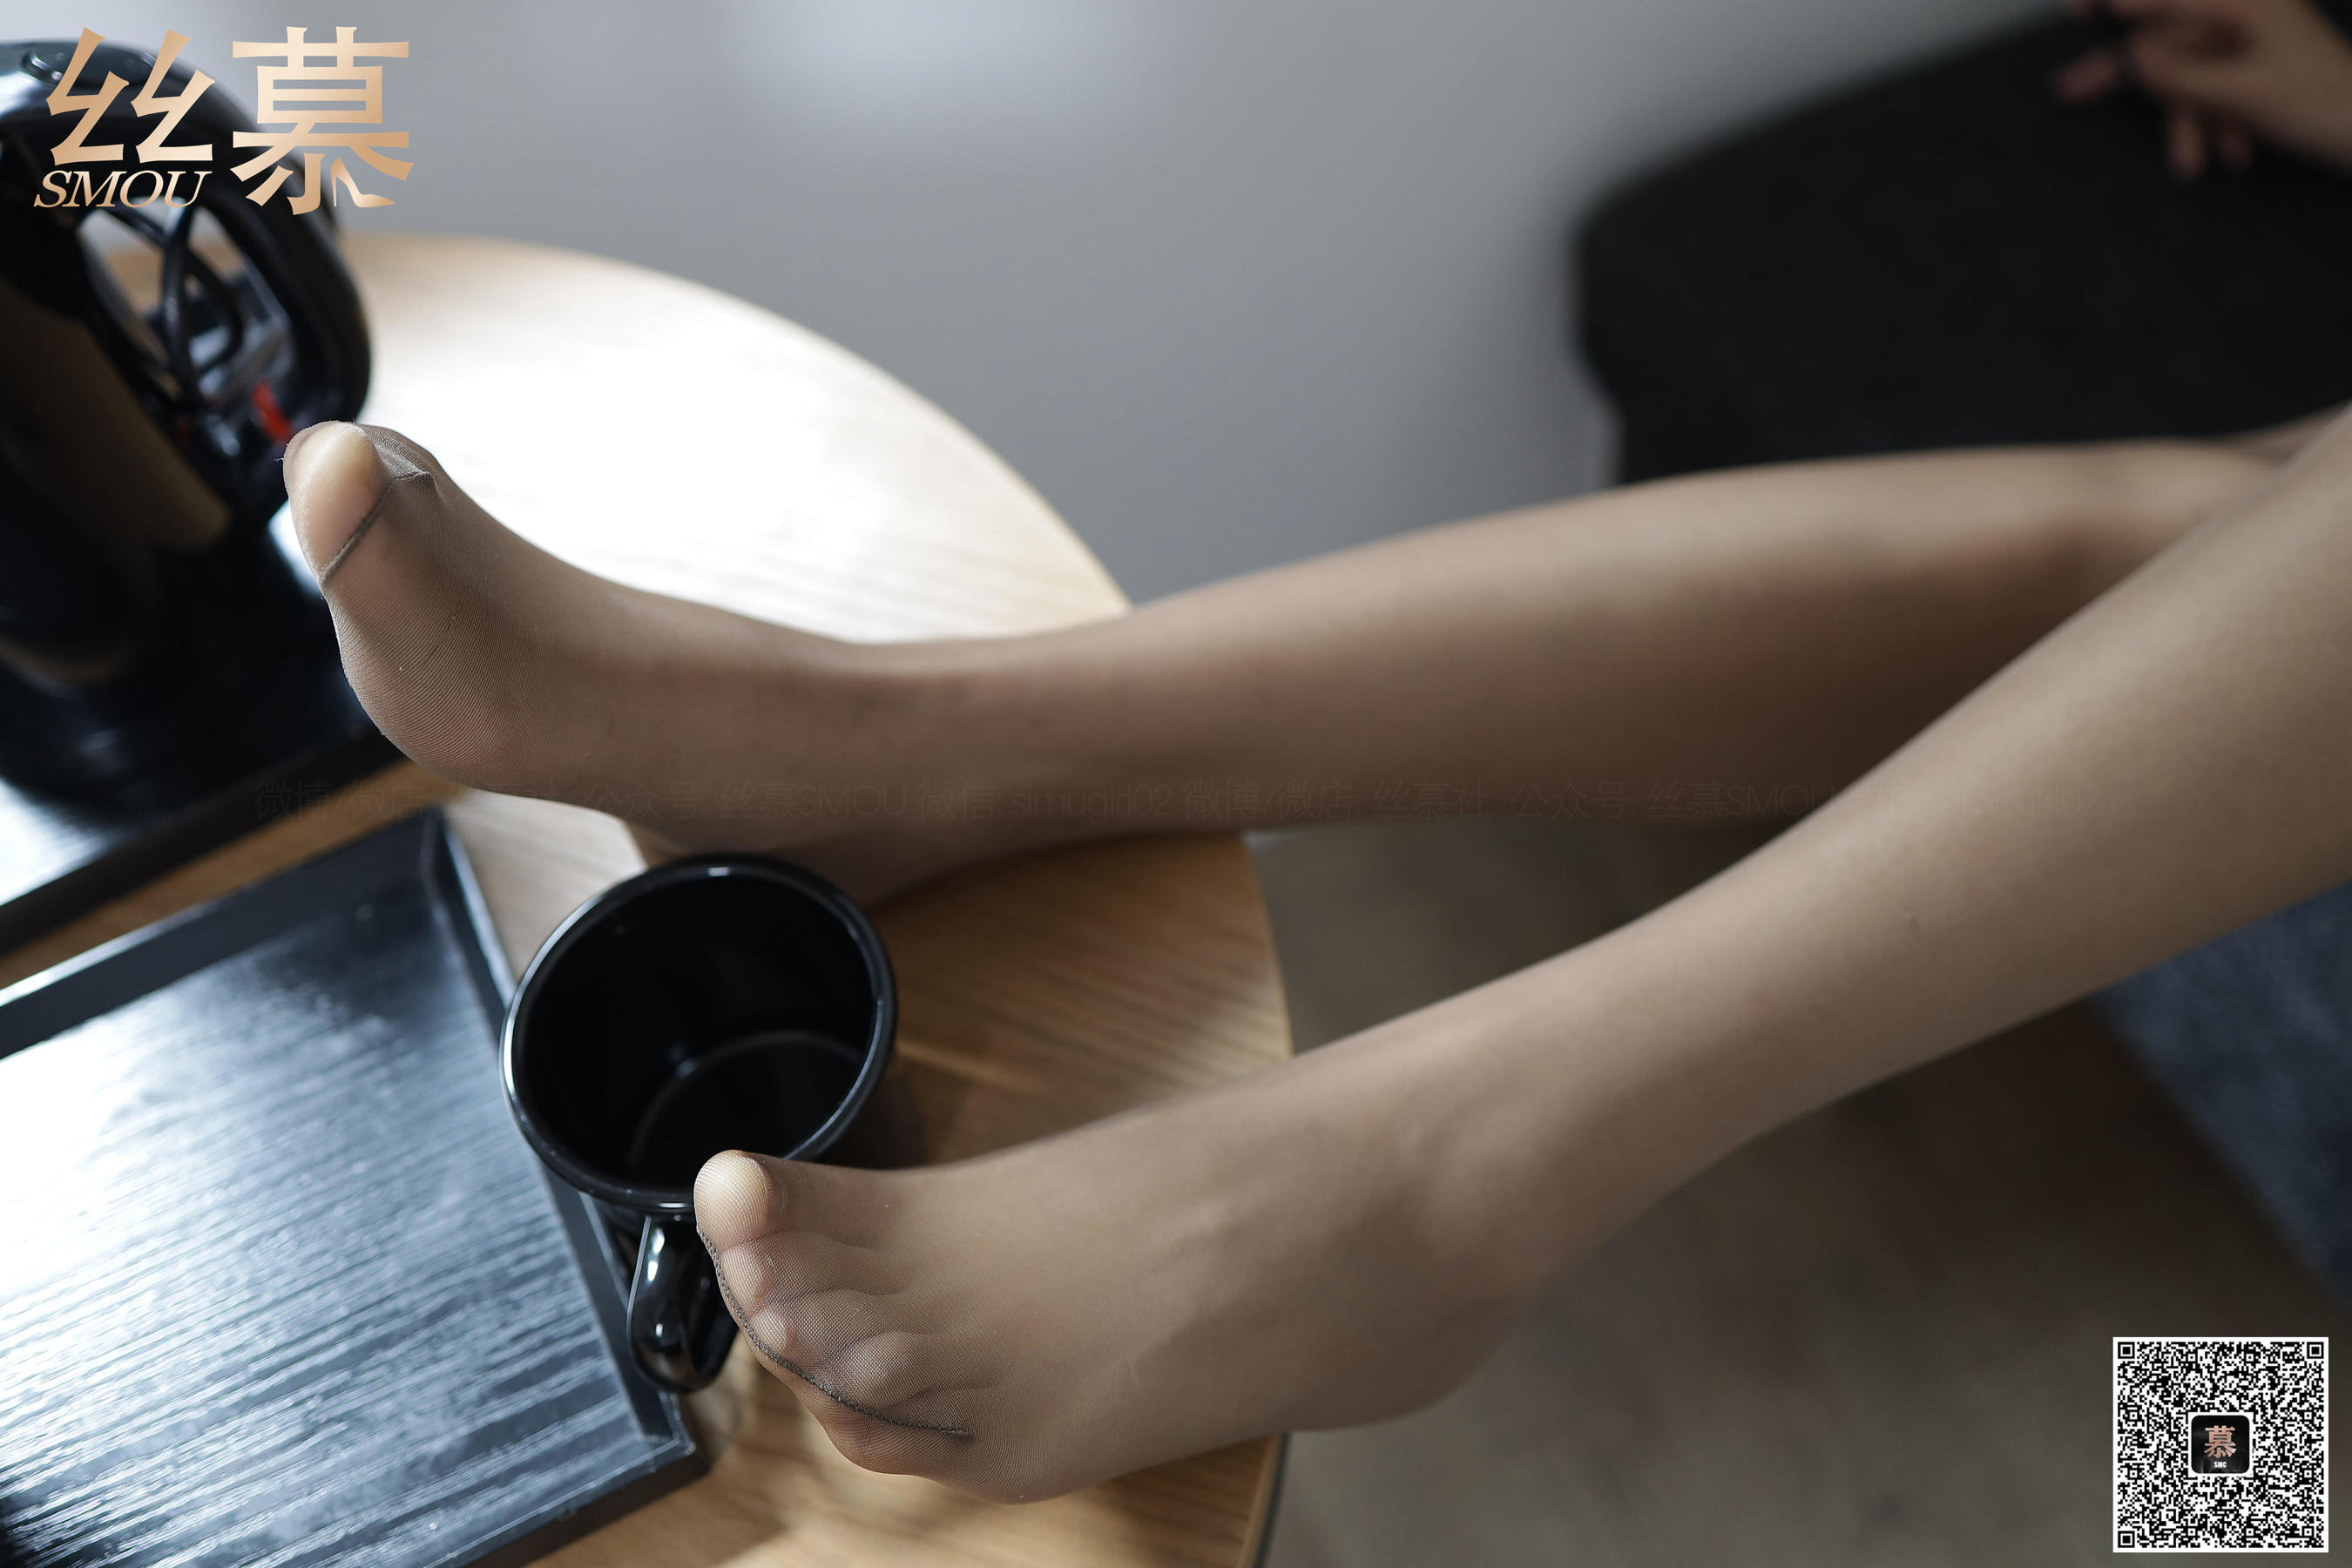 [慕] TX073 Zhizhi “White Collar Coffee” stockings leg photo